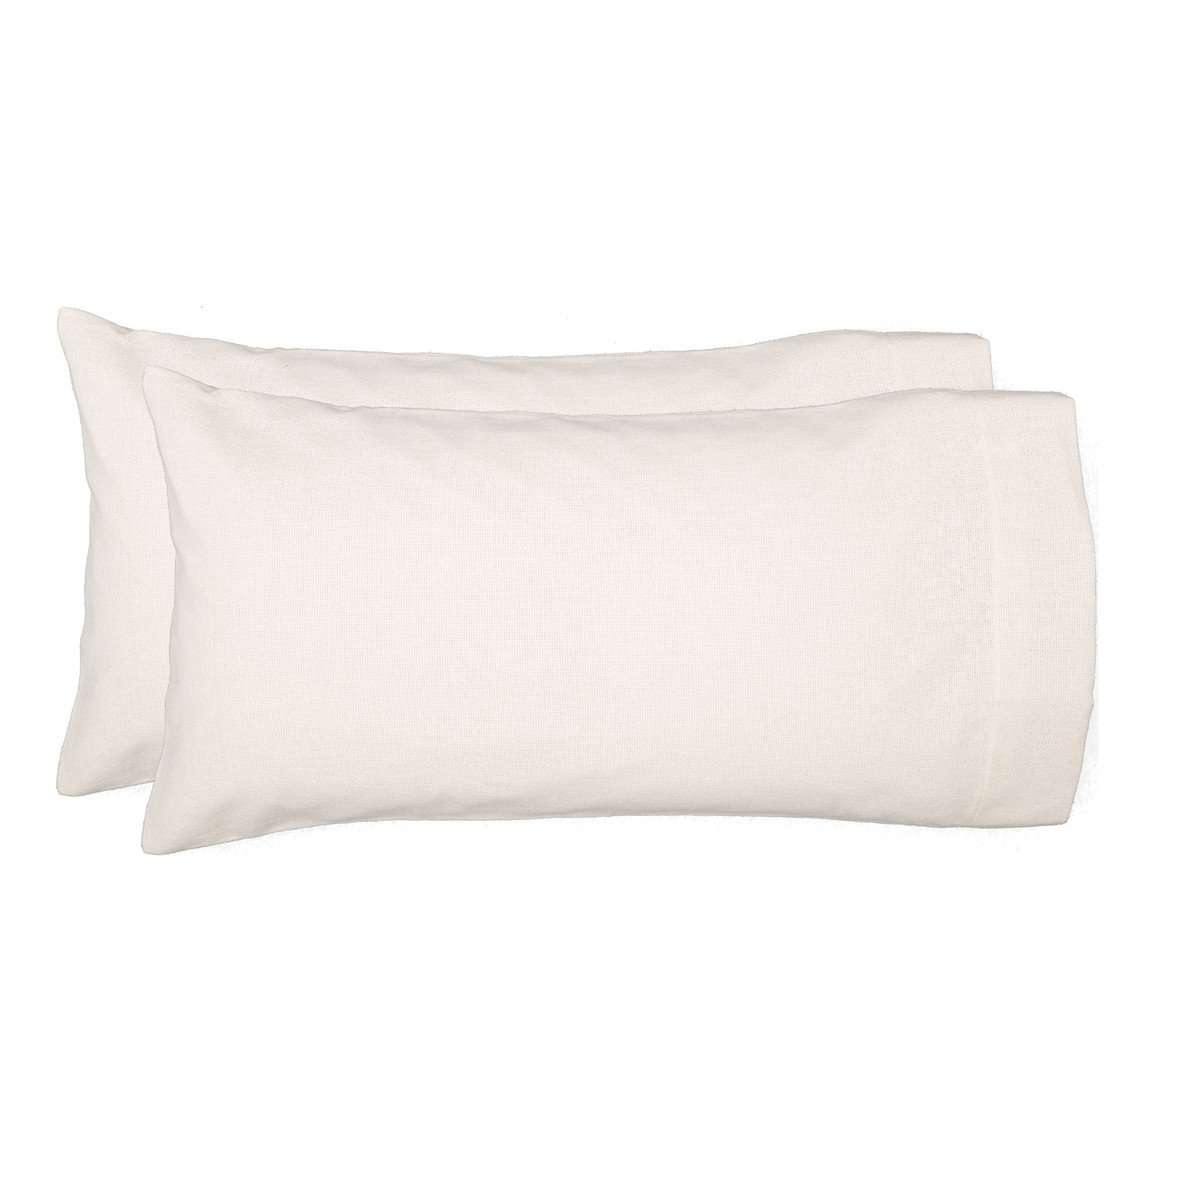 Burlap Antique White King Pillow Case Set of 2 21x40 VHC Brands - The Fox Decor